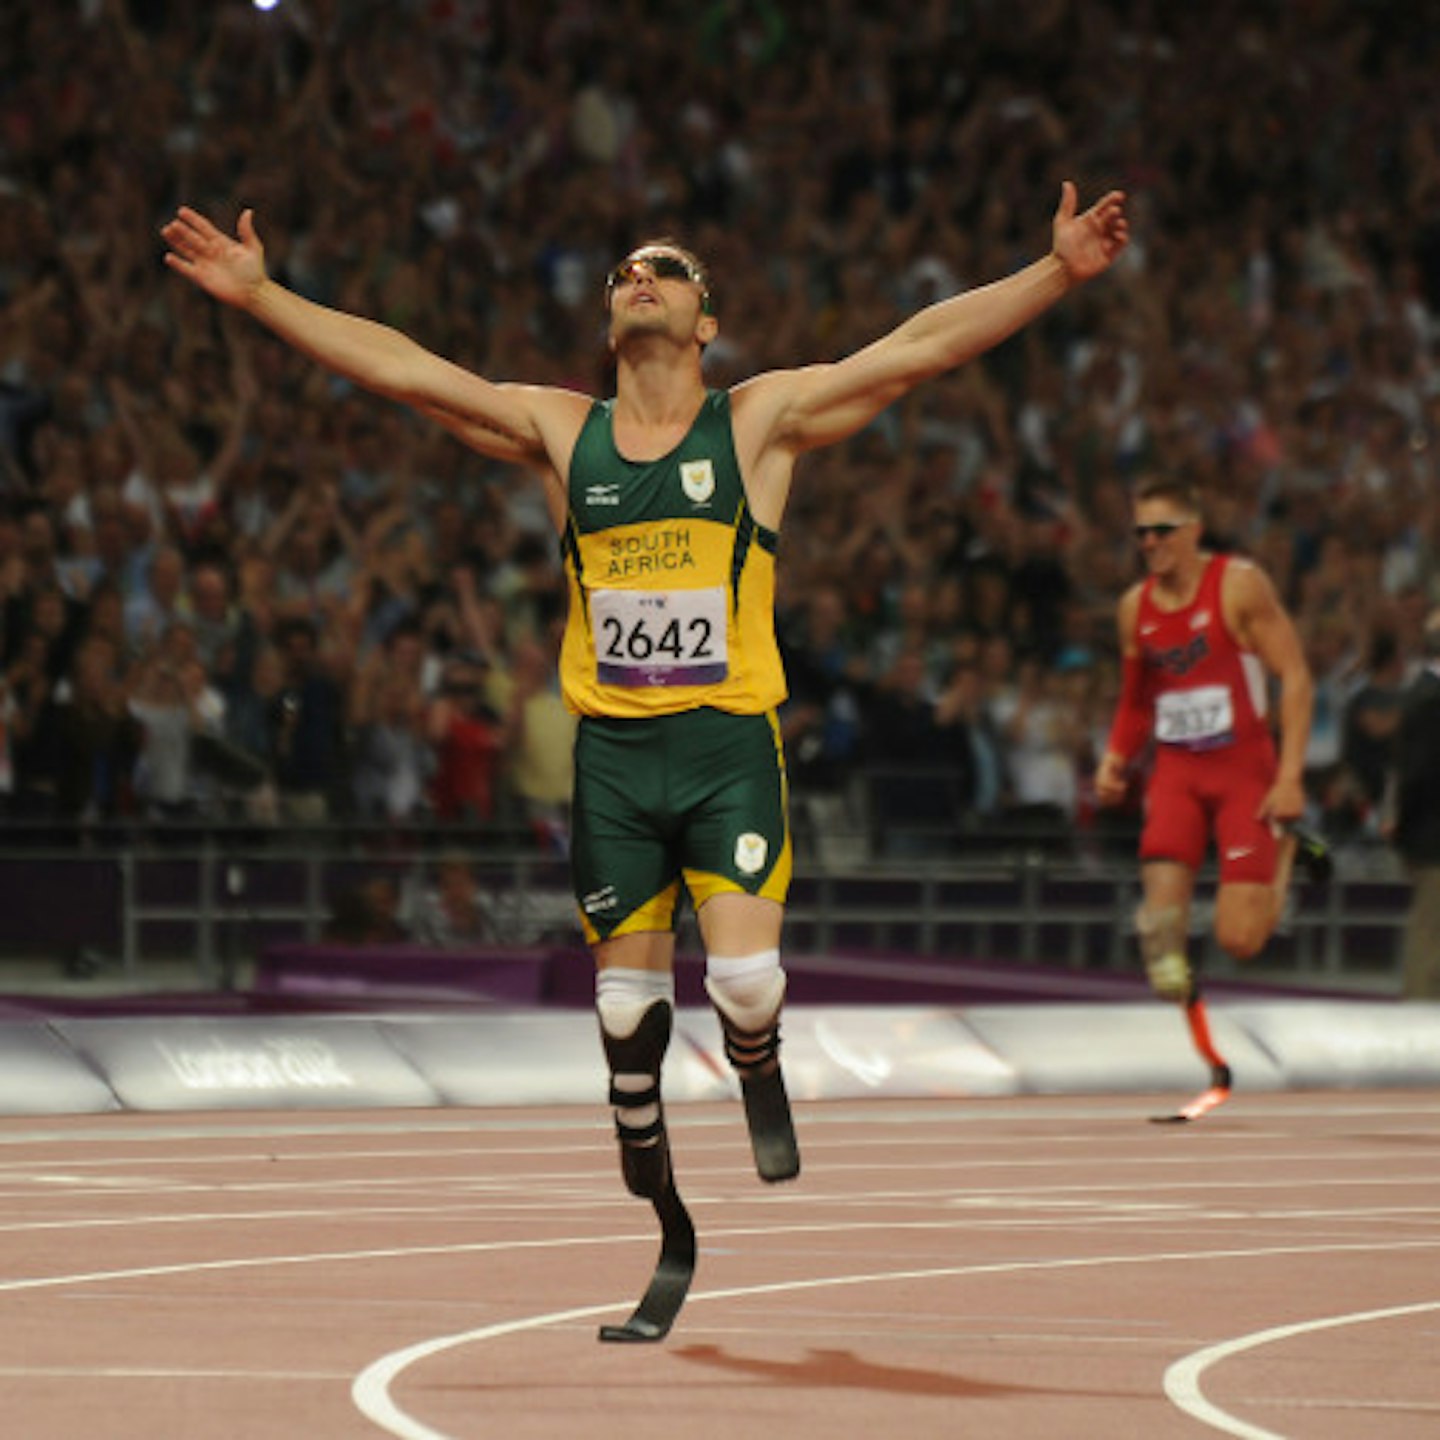 Pistorius winning gold before the tragedy